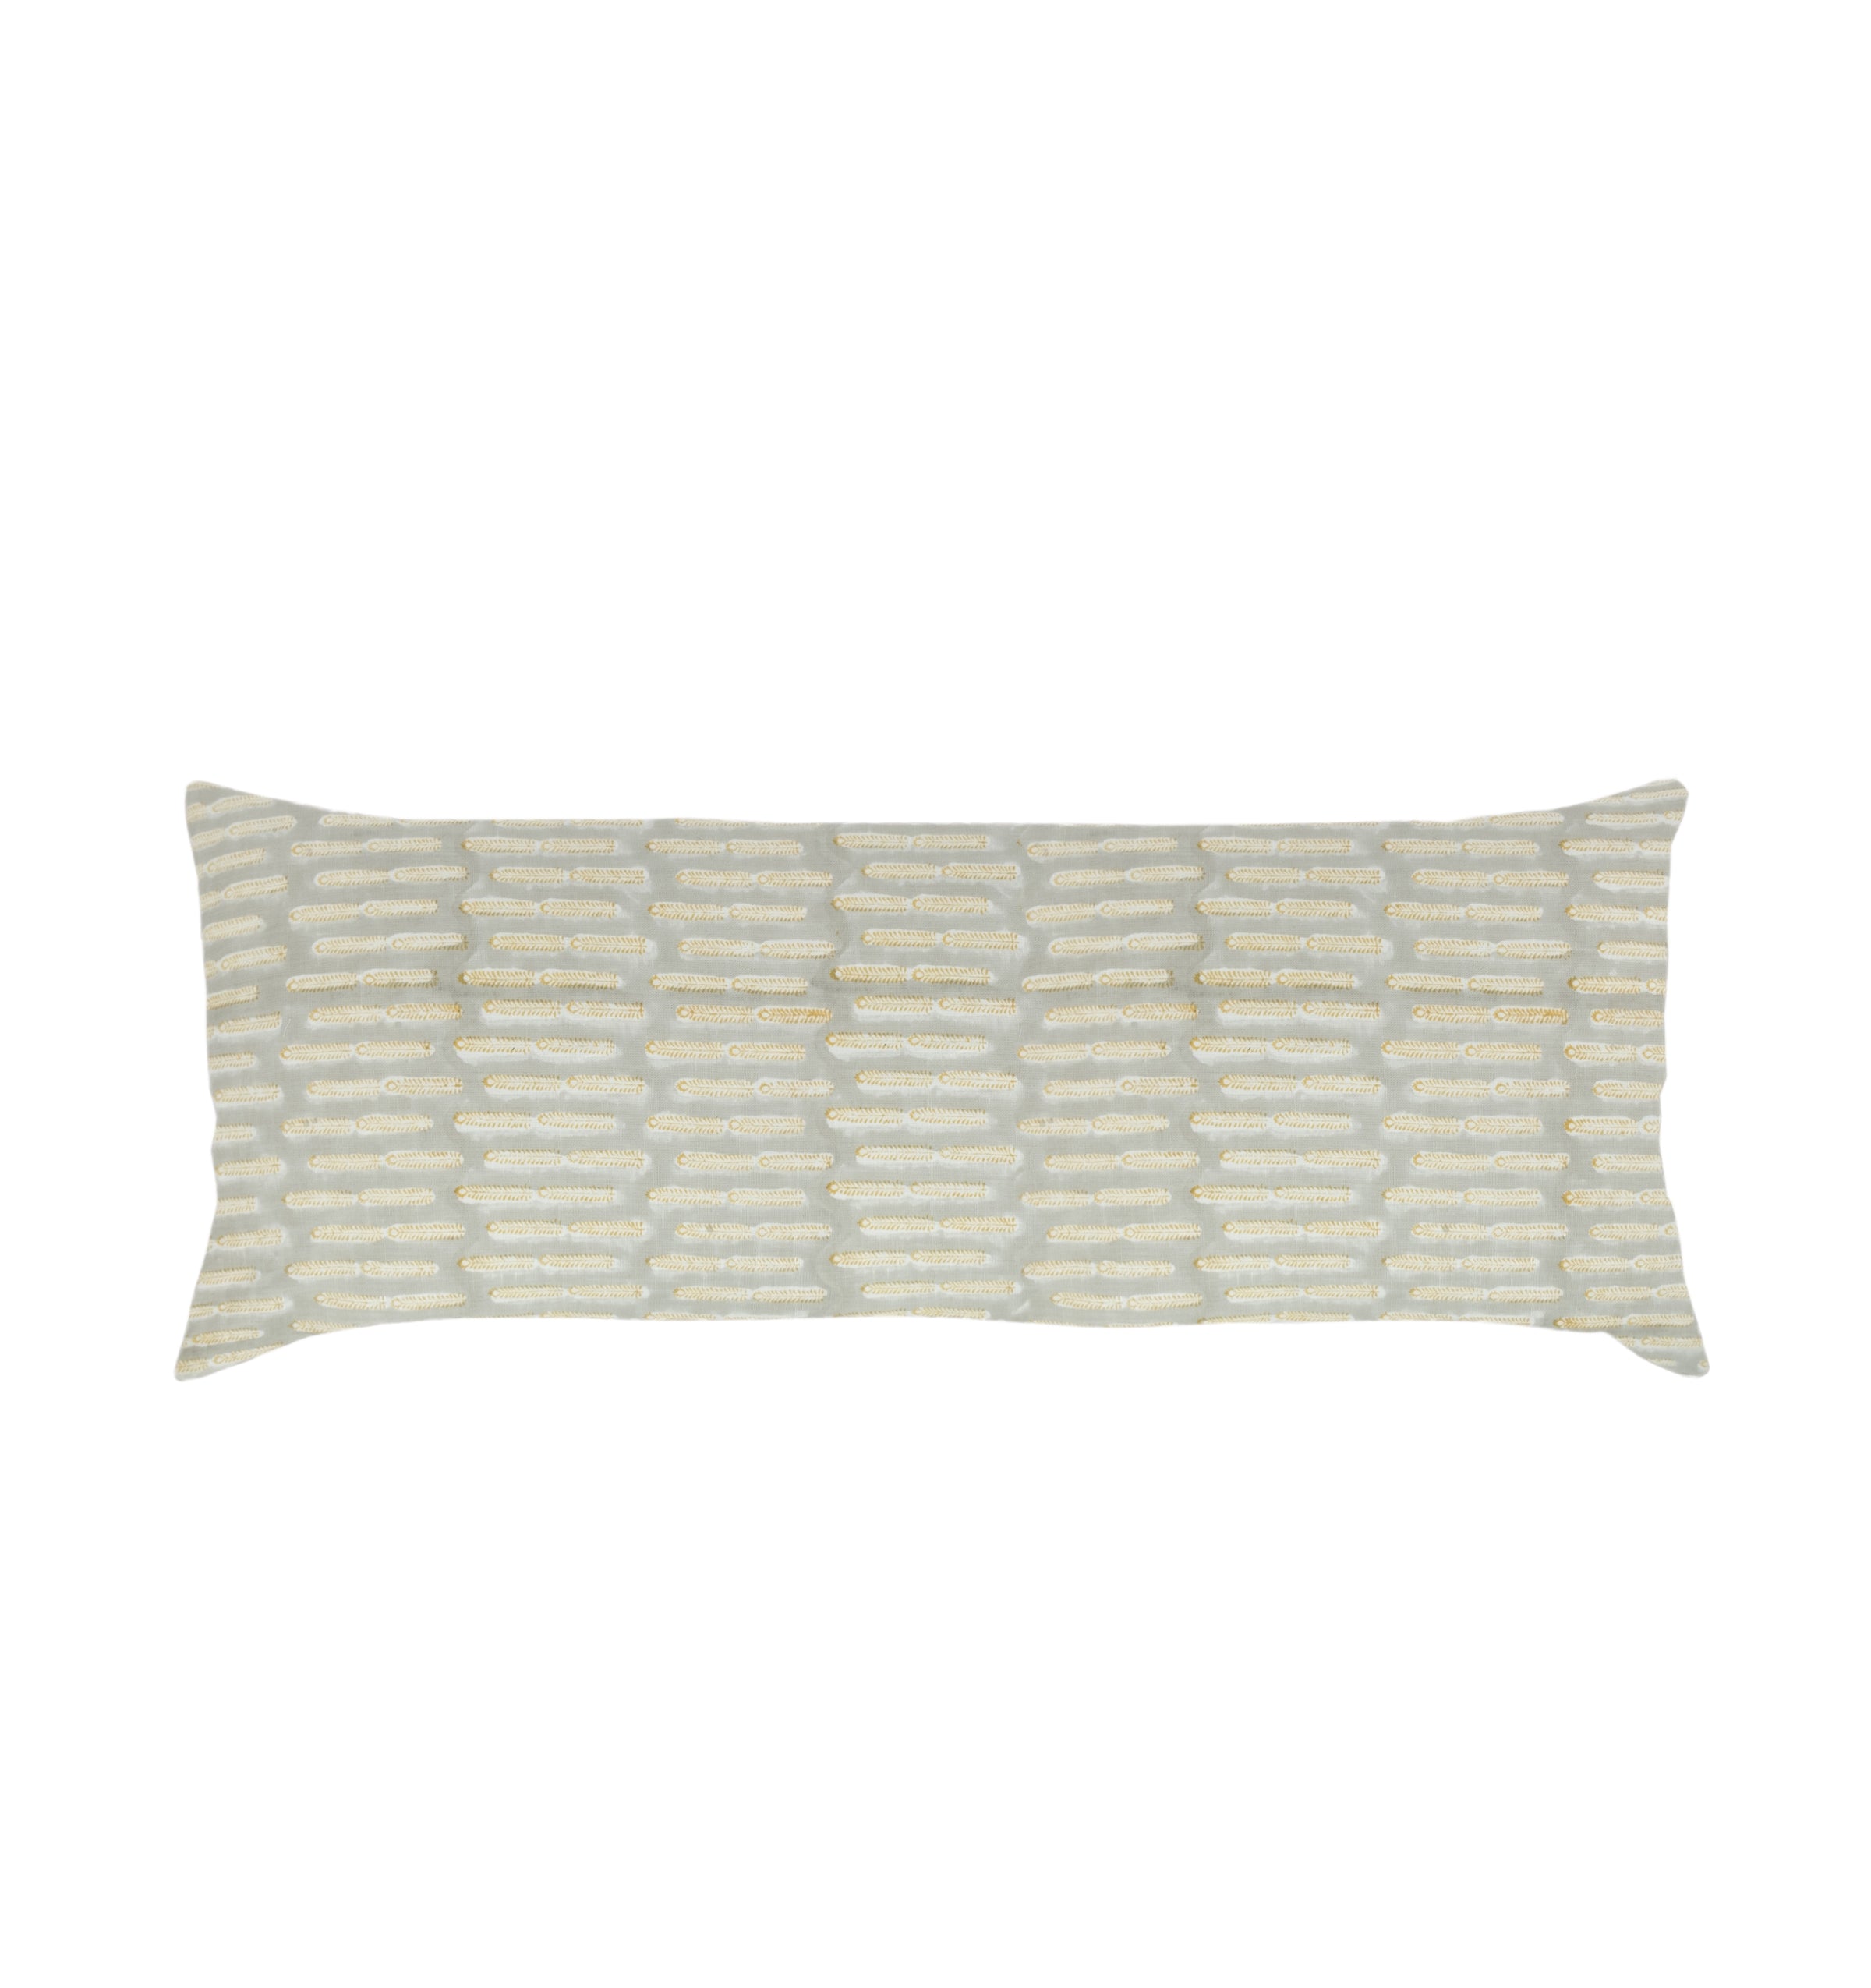 Savannah Dijon Linen Pillow